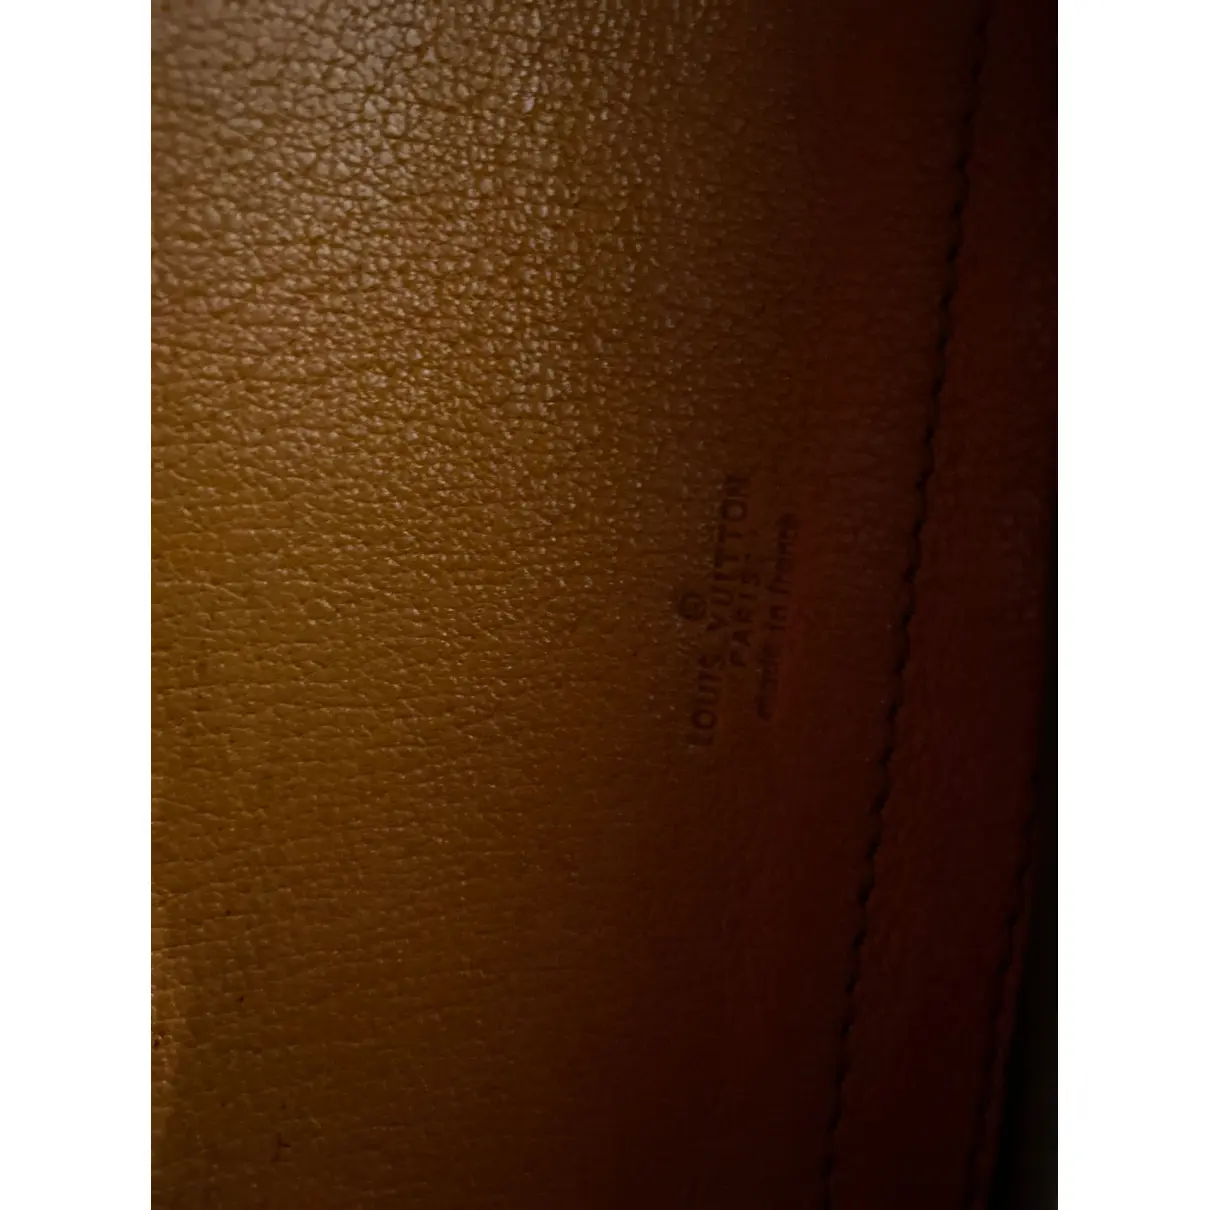 Buy Louis Vuitton Chantilly leather handbag online